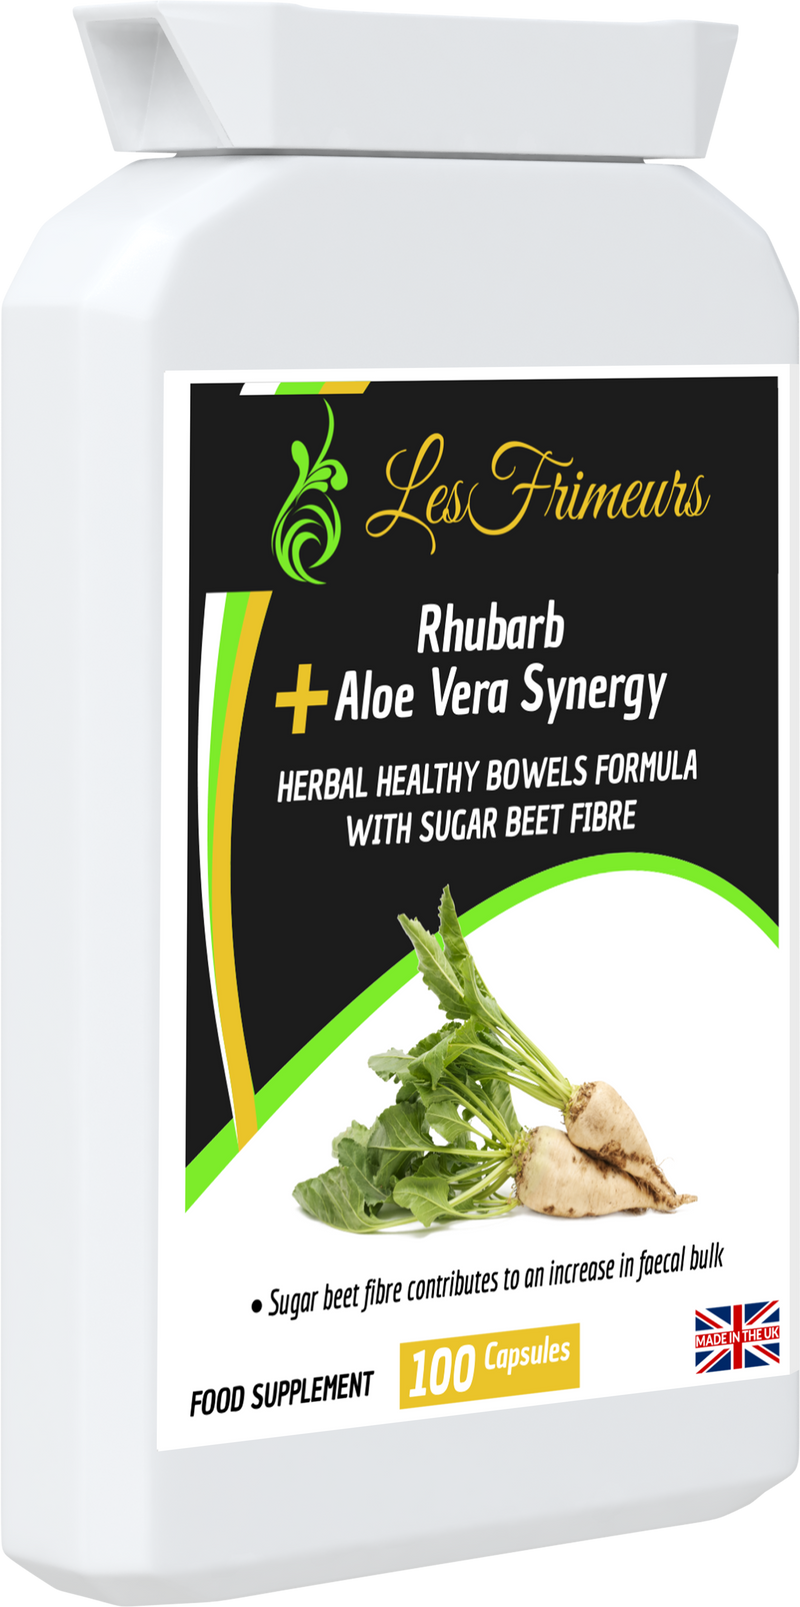 Les Frimeurs Rhubarb + Aloe Vera Synergy